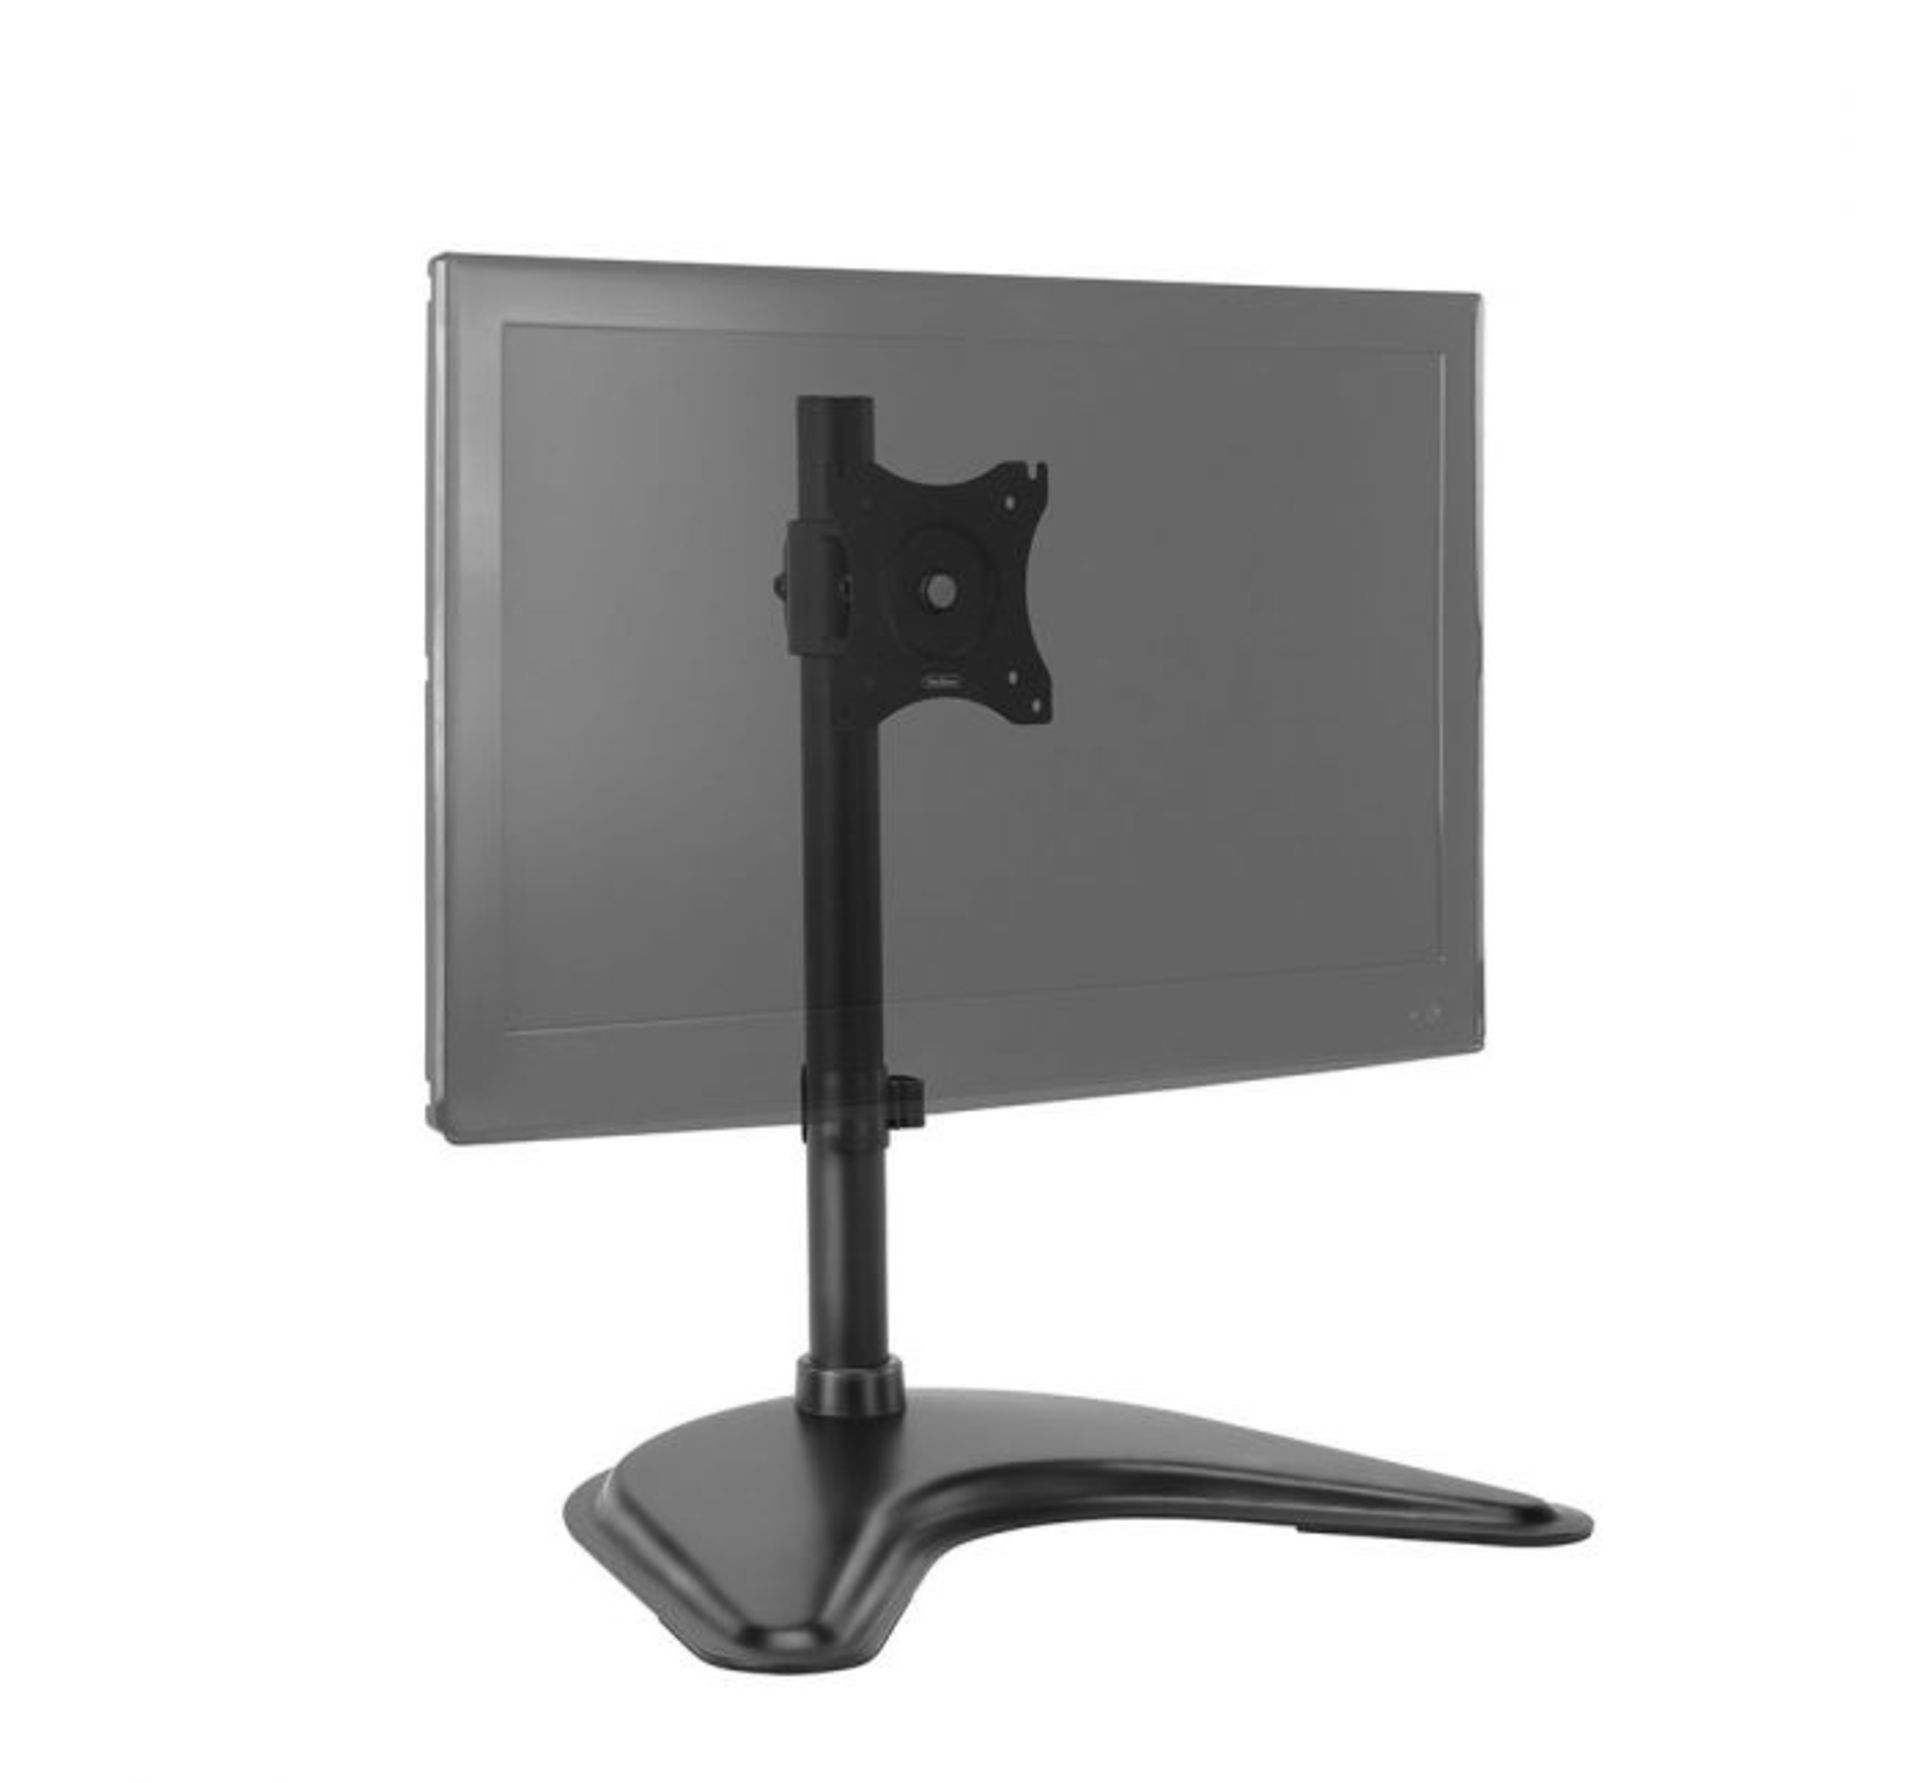 (X42) 1x Single Monitor Desk Mount. Heavy-duty single monitor mount - maximum weight capacity 10kg. - Image 3 of 3